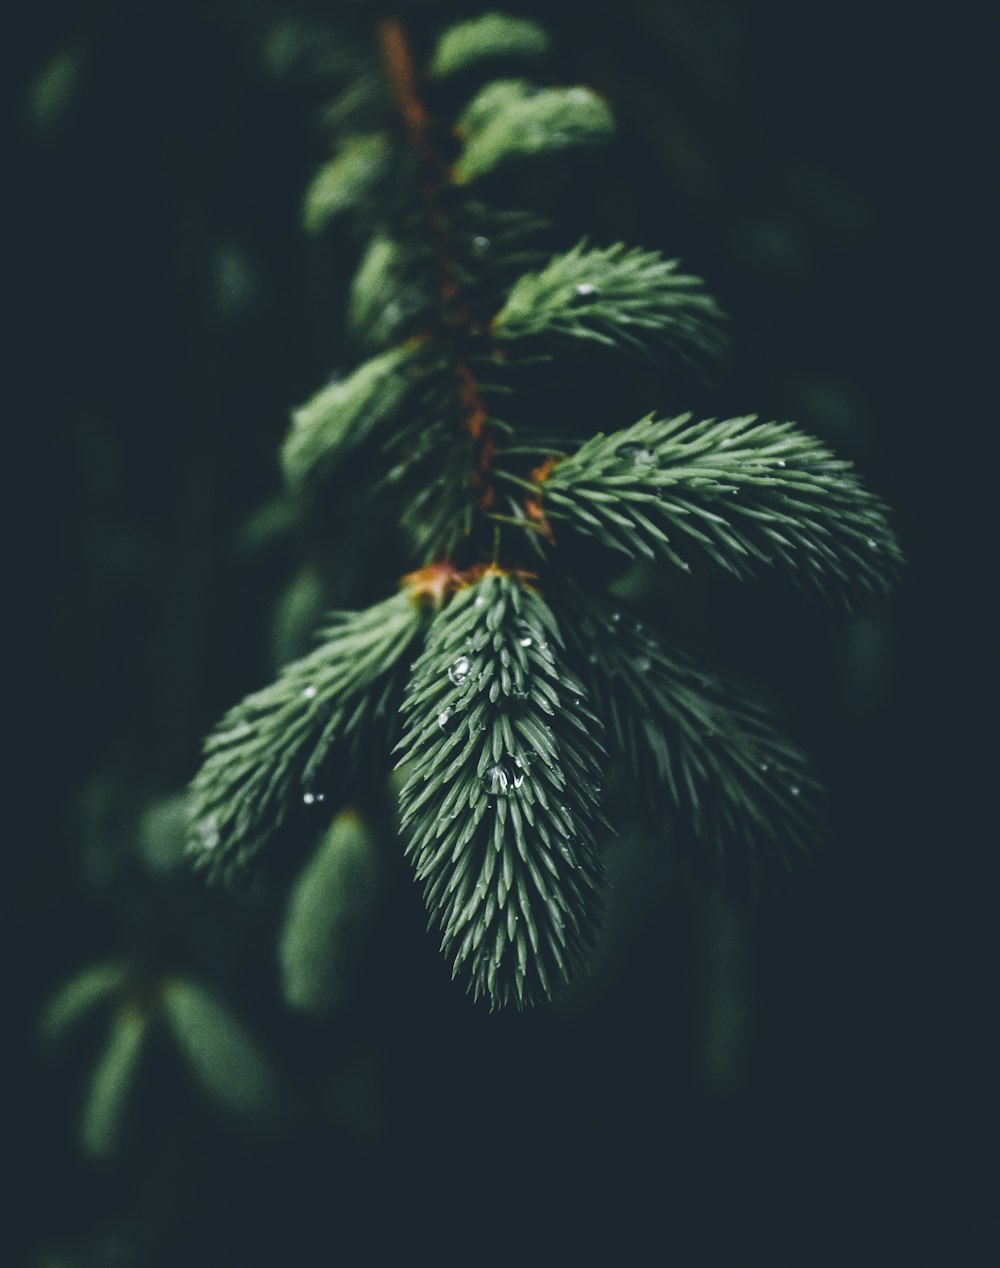 Fotografia de foco raso da árvore de abeto verde